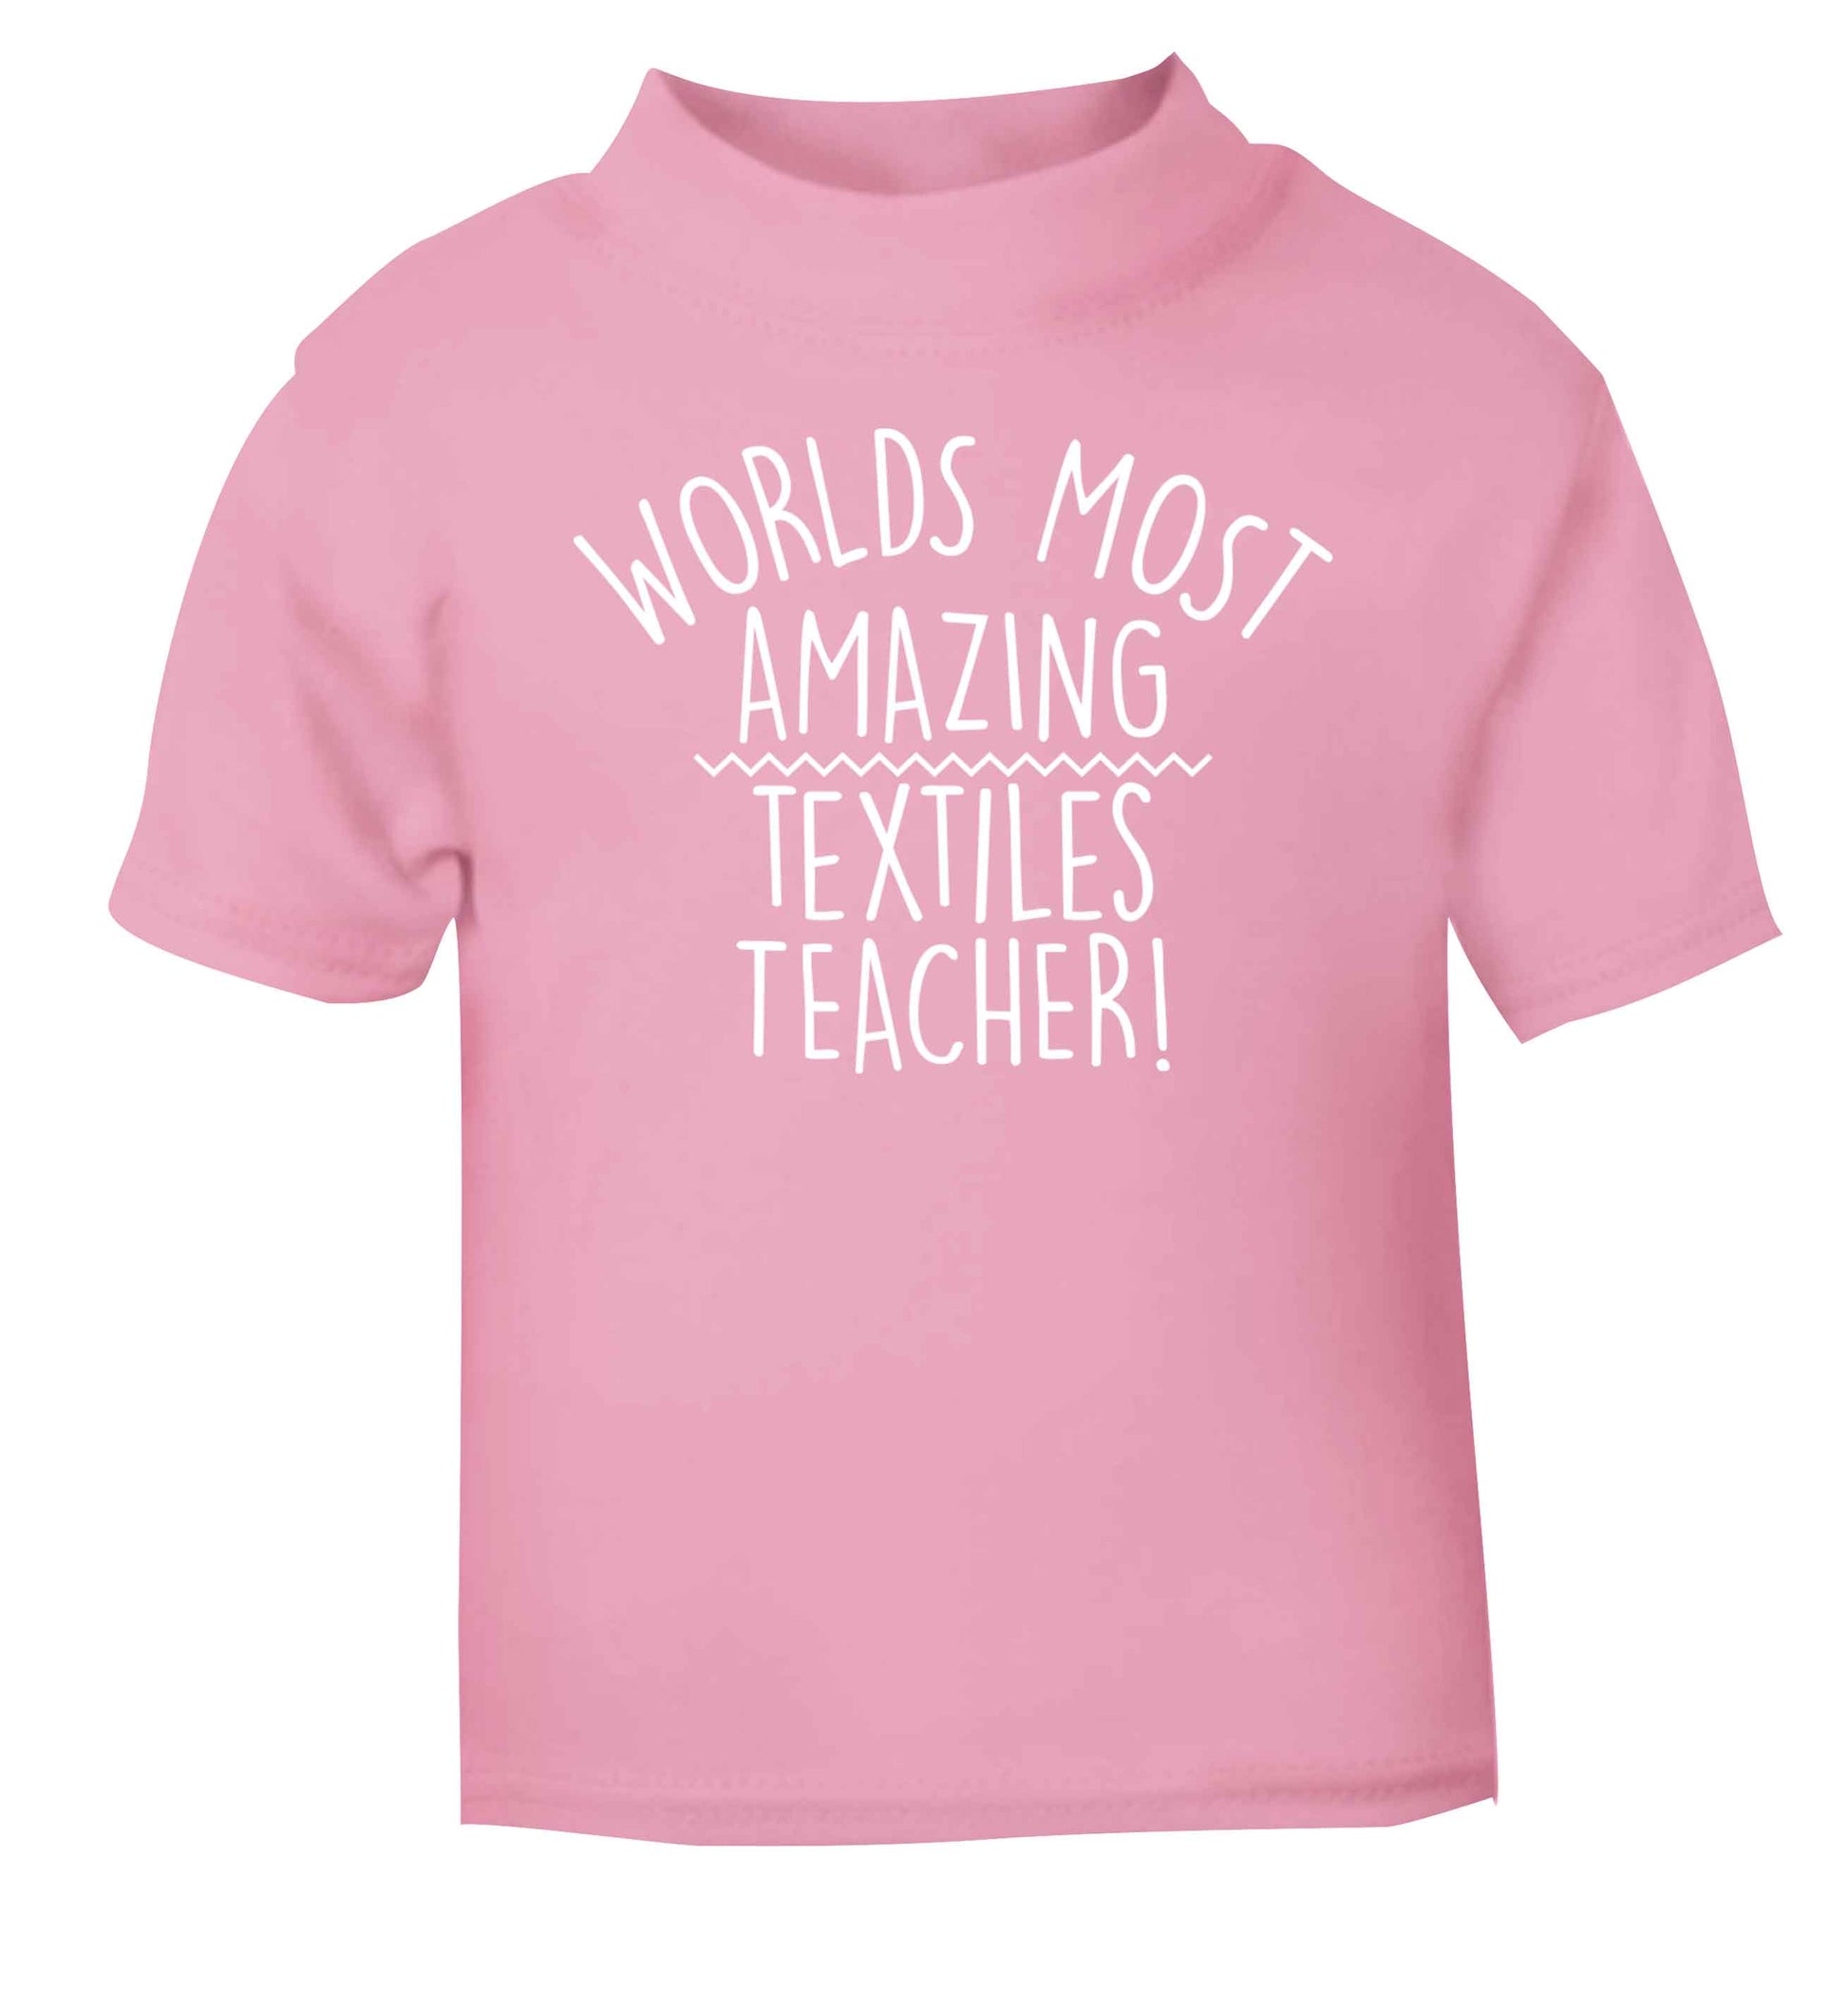 Worlds most amazing textiles teacher light pink baby toddler Tshirt 2 Years